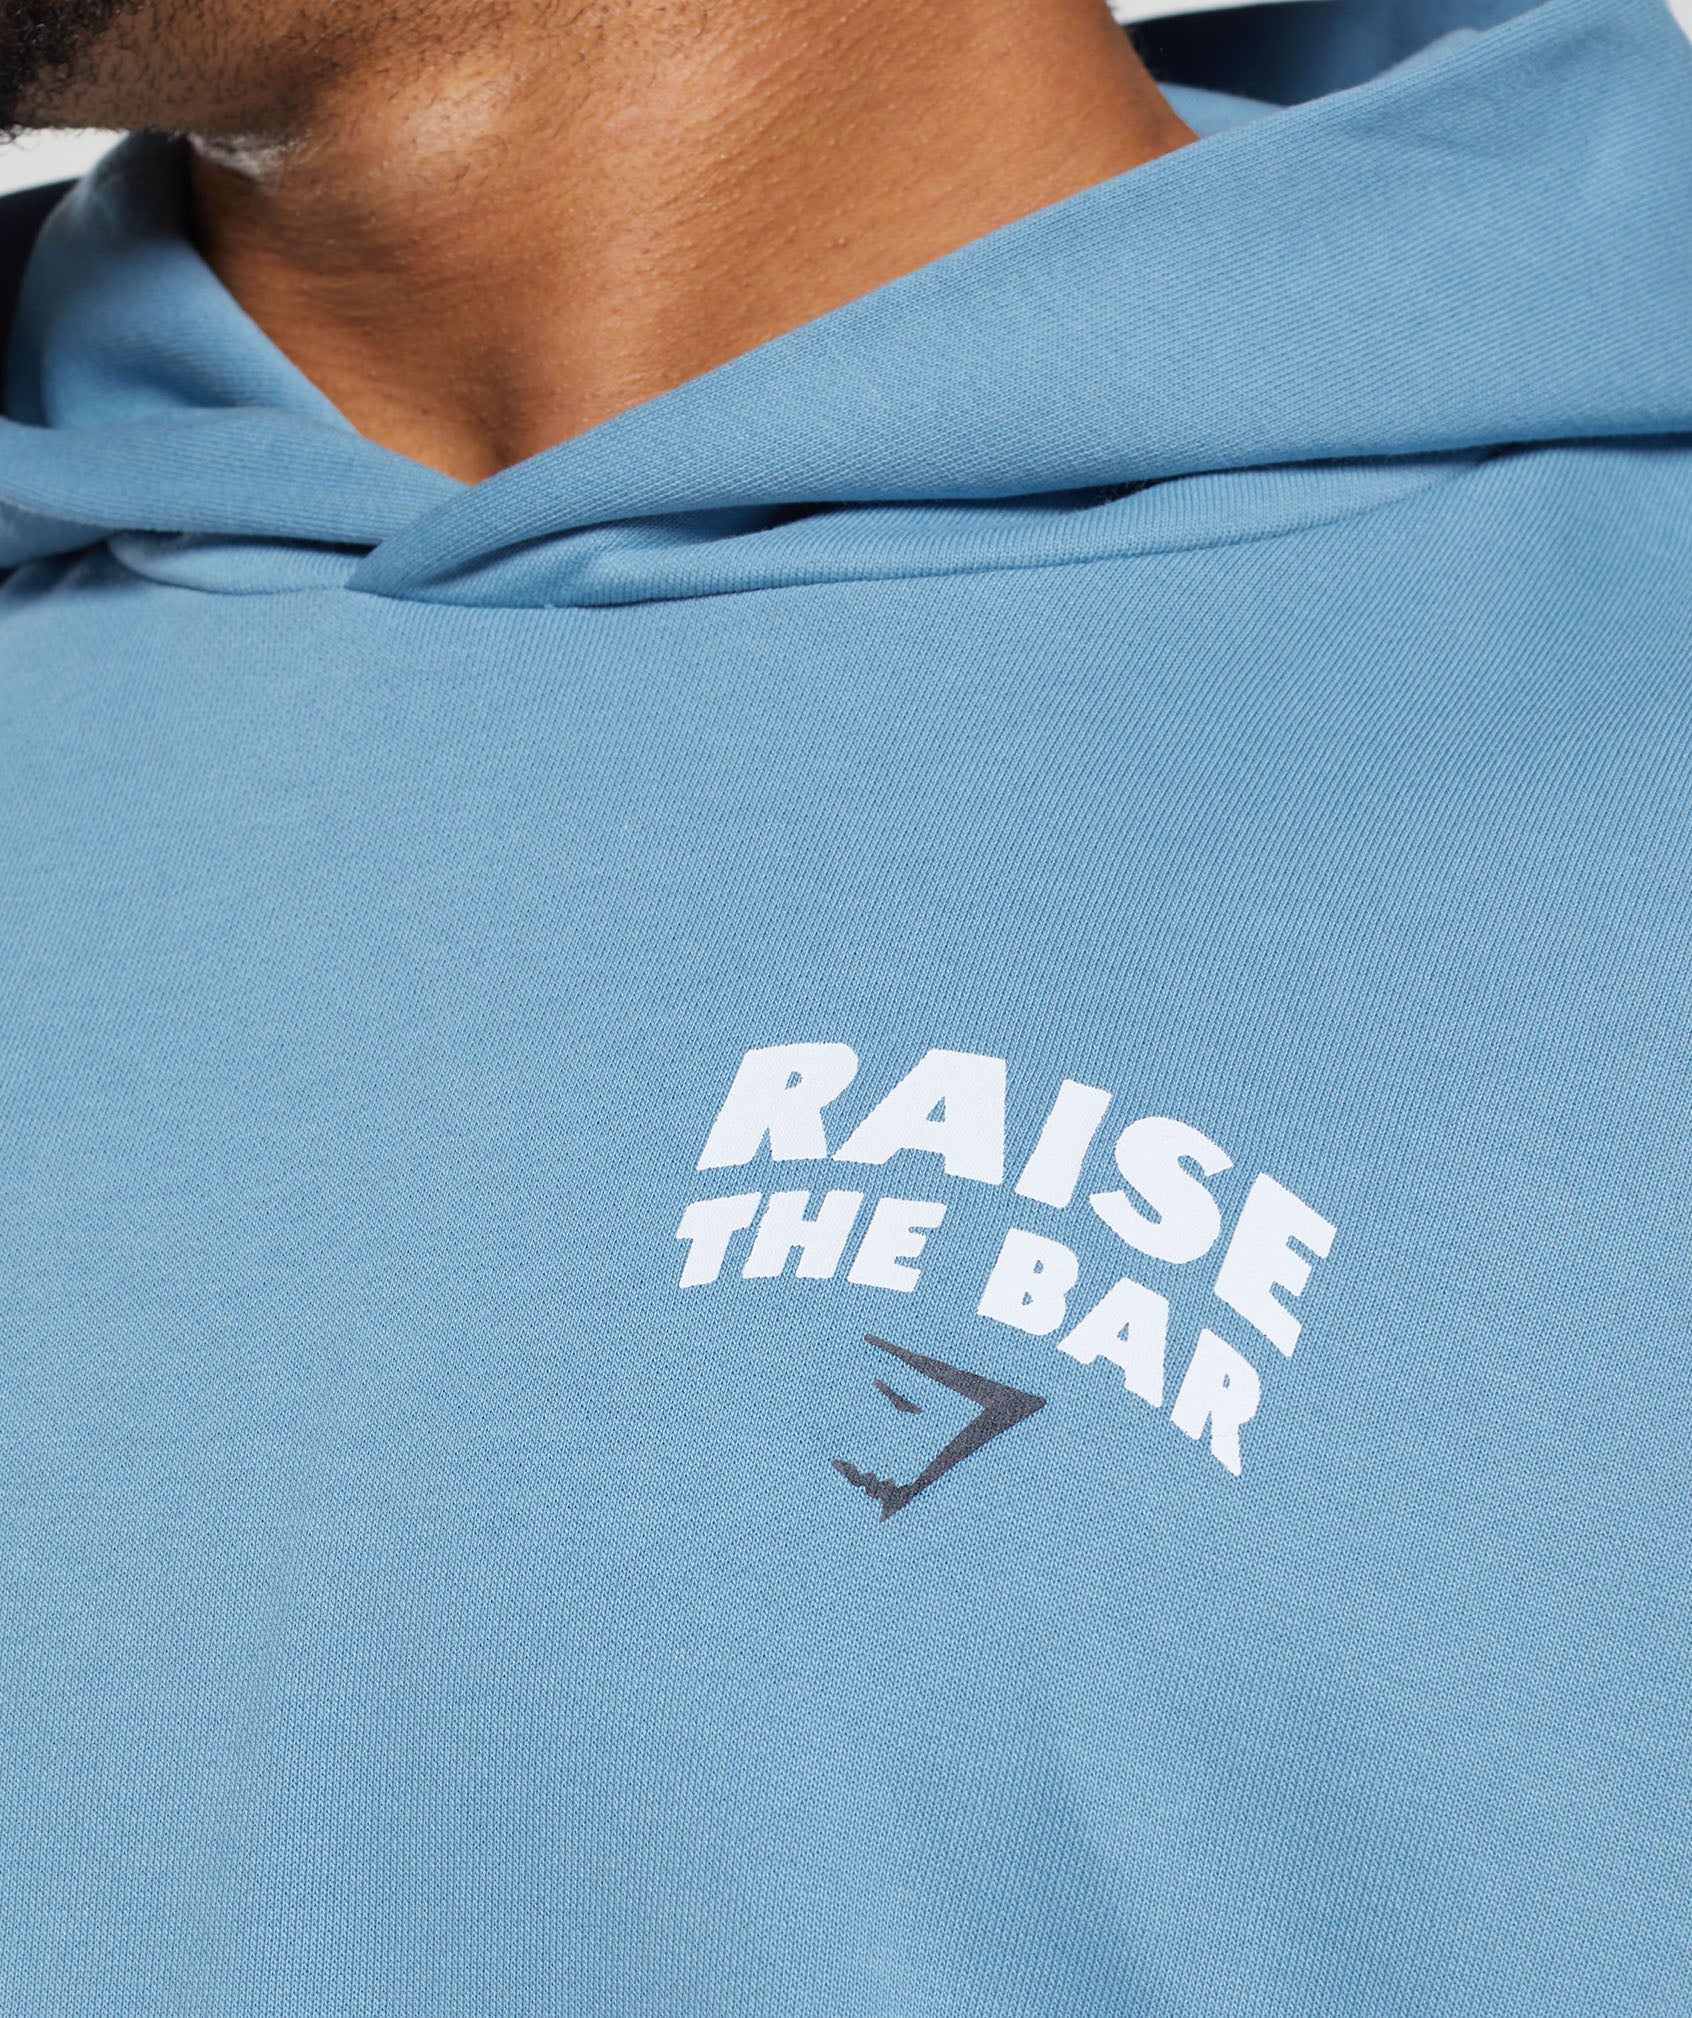 Raise the Bar Hoodie in Dusk Blue - view 4